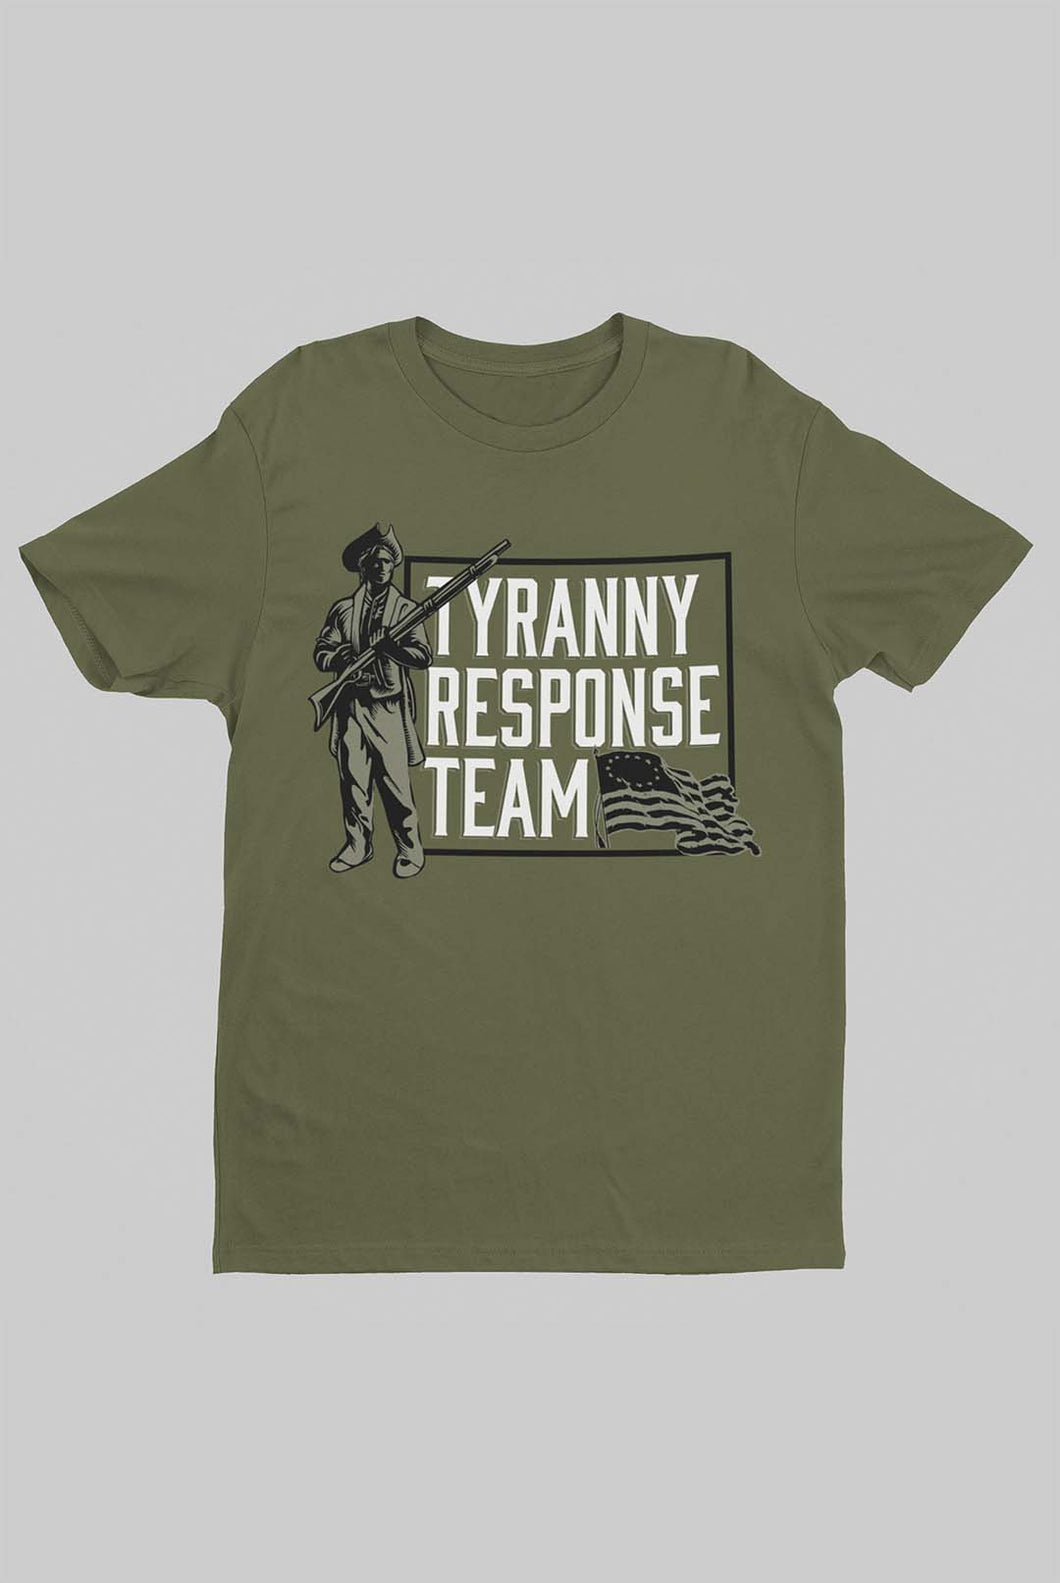 Resist Tyranny Collection-Tyranny Response Team Tee